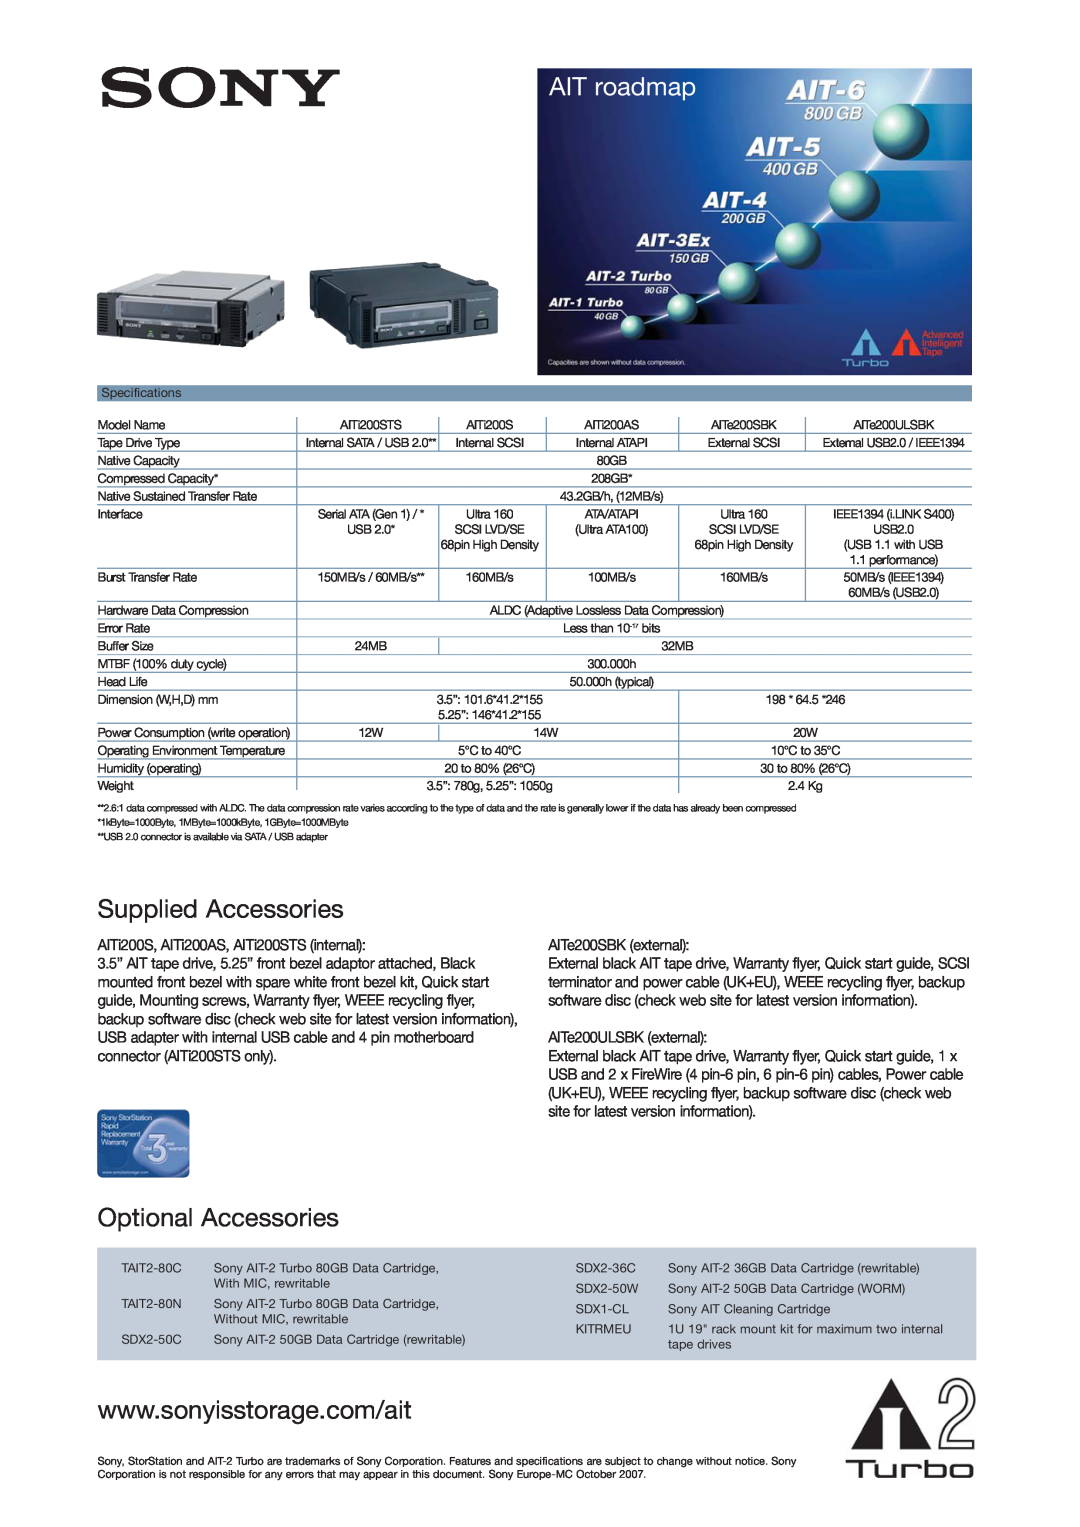 Sony manual Supplied Accessories, Optional Accessories, AIT roadmap, AITi200S, AITi200AS, AITi200STS internal 